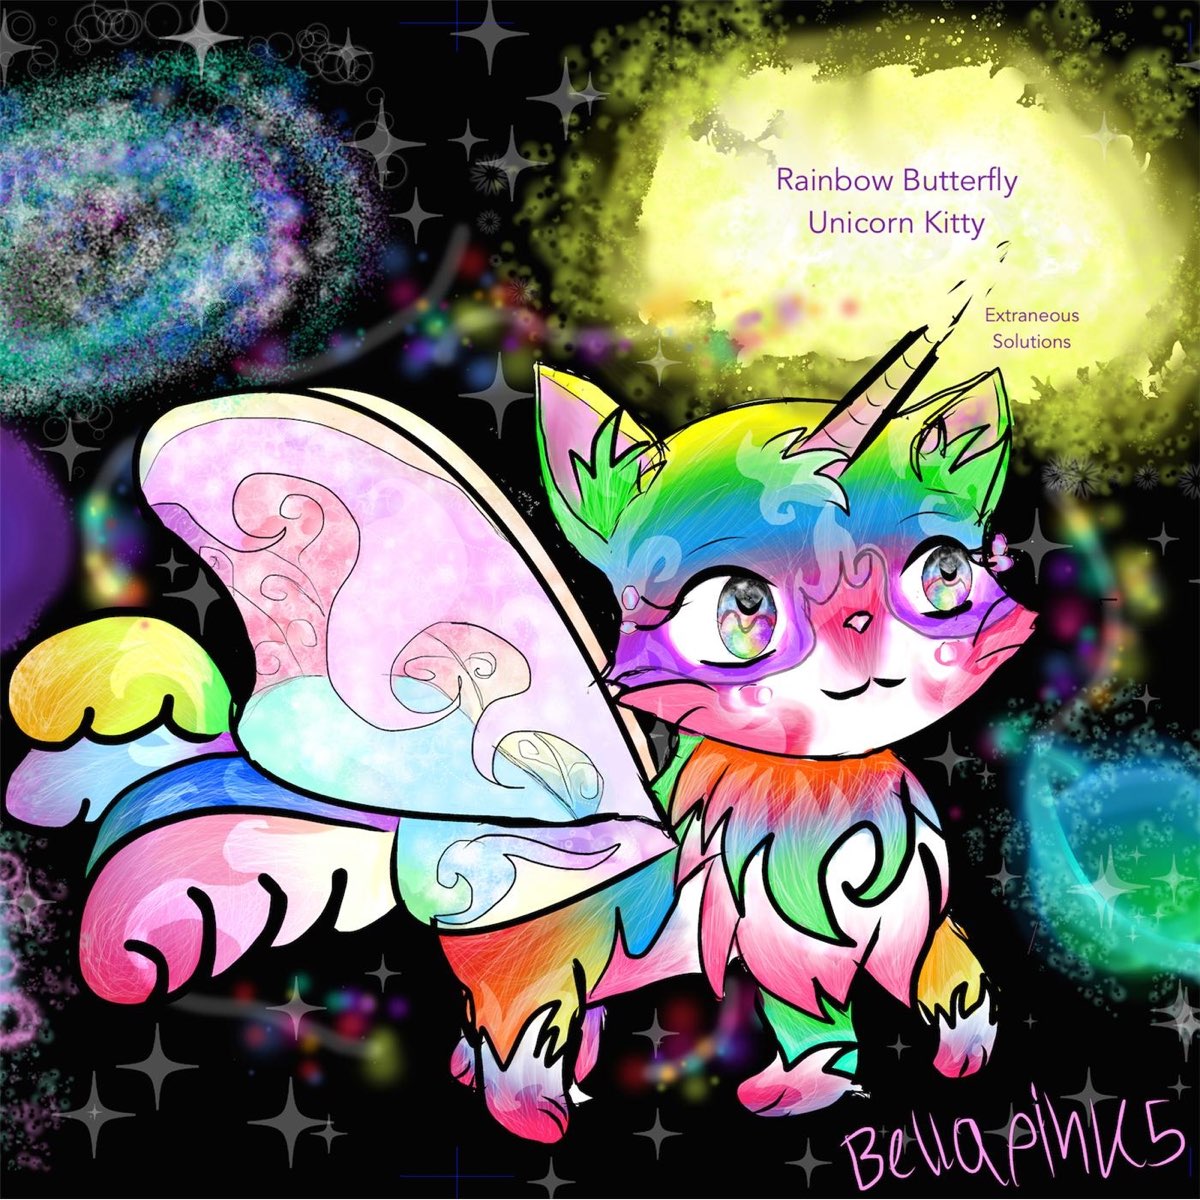 híbrido hierro Agarrar Rainbow Butterfly Unicorn Kitty - Single de Extraneous Solutions en Apple  Music